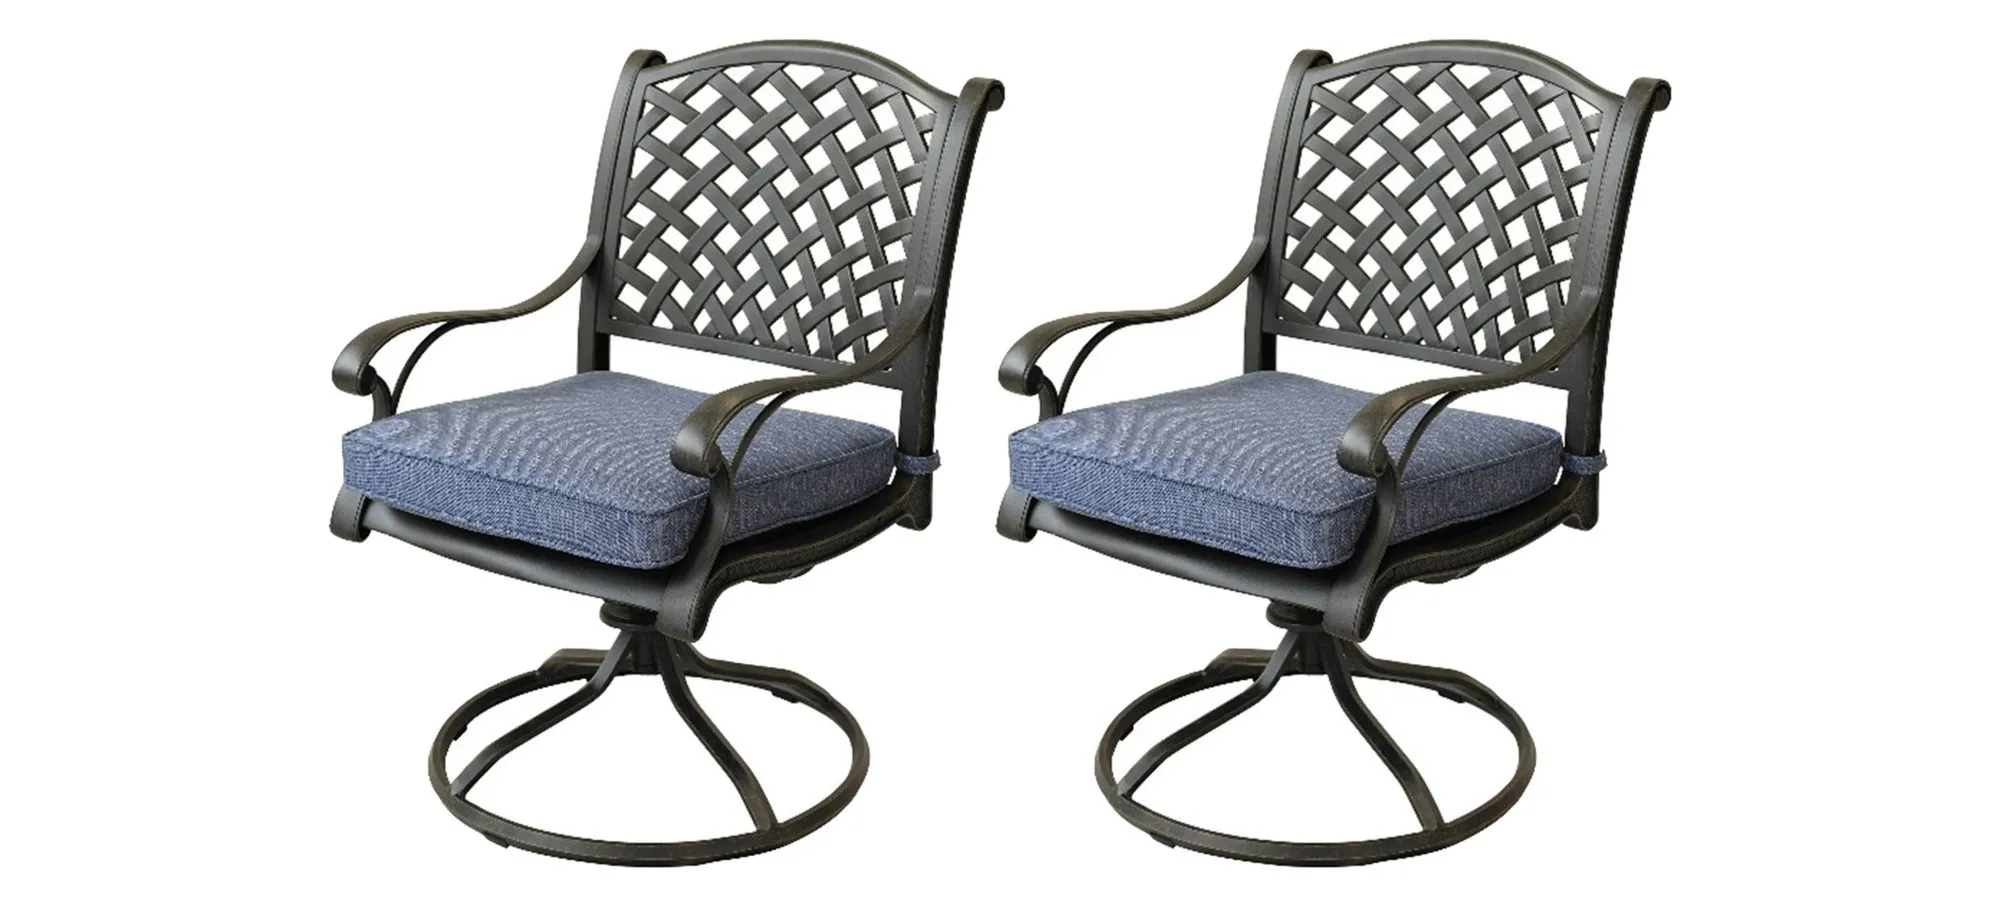 Castle Rock Outdoor Swivel Rocker Dining Chair, Set of 2 in Natural / Beige by Bellanest